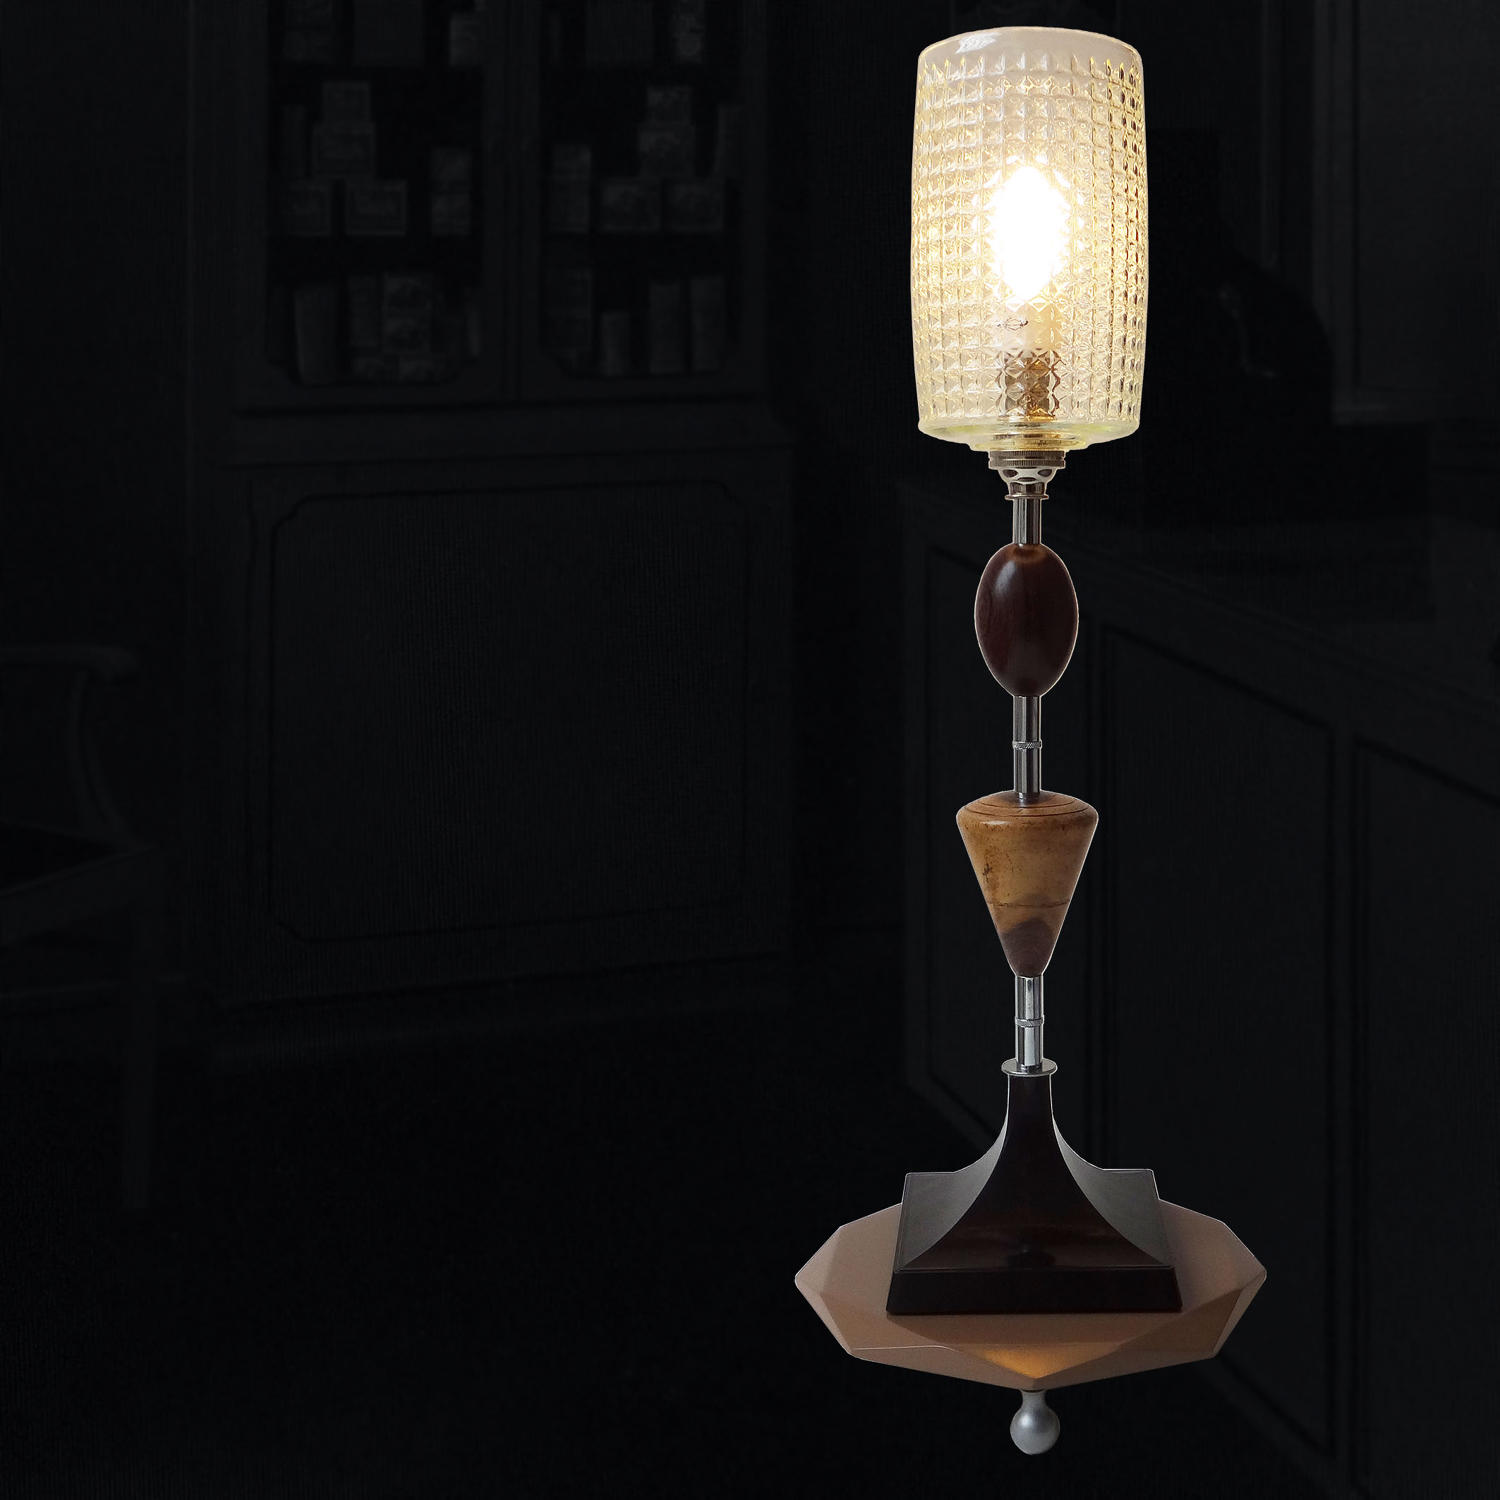 Unique lamp design - Perspective - by Gilles Bourlet Dartmouth